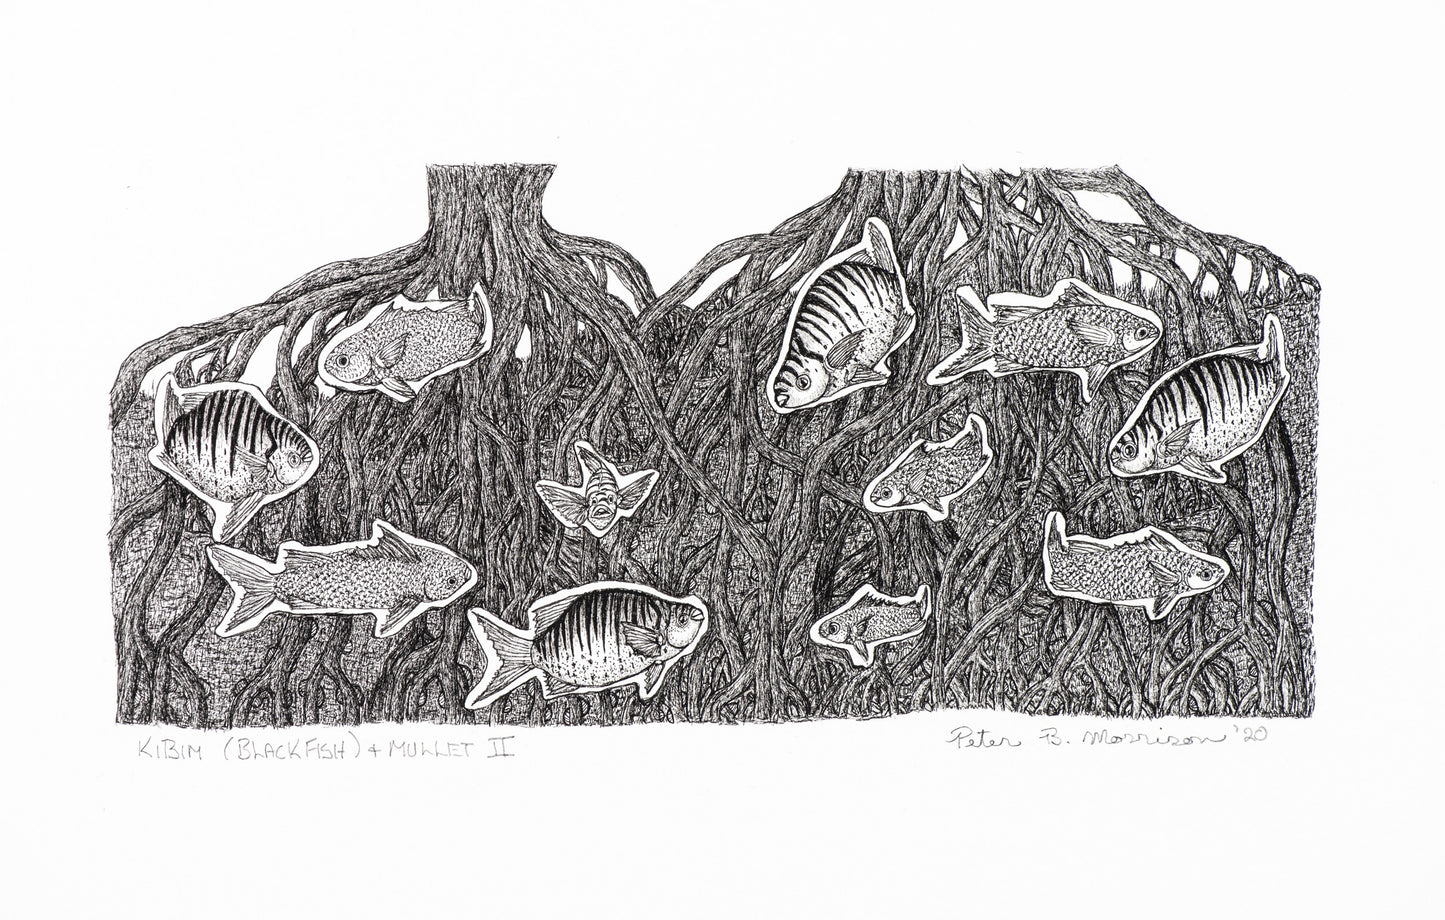 PETER B MORRISON | 'Kibim (Black Fish) & Mullet II' Drawing | Pen and ink on archival paper